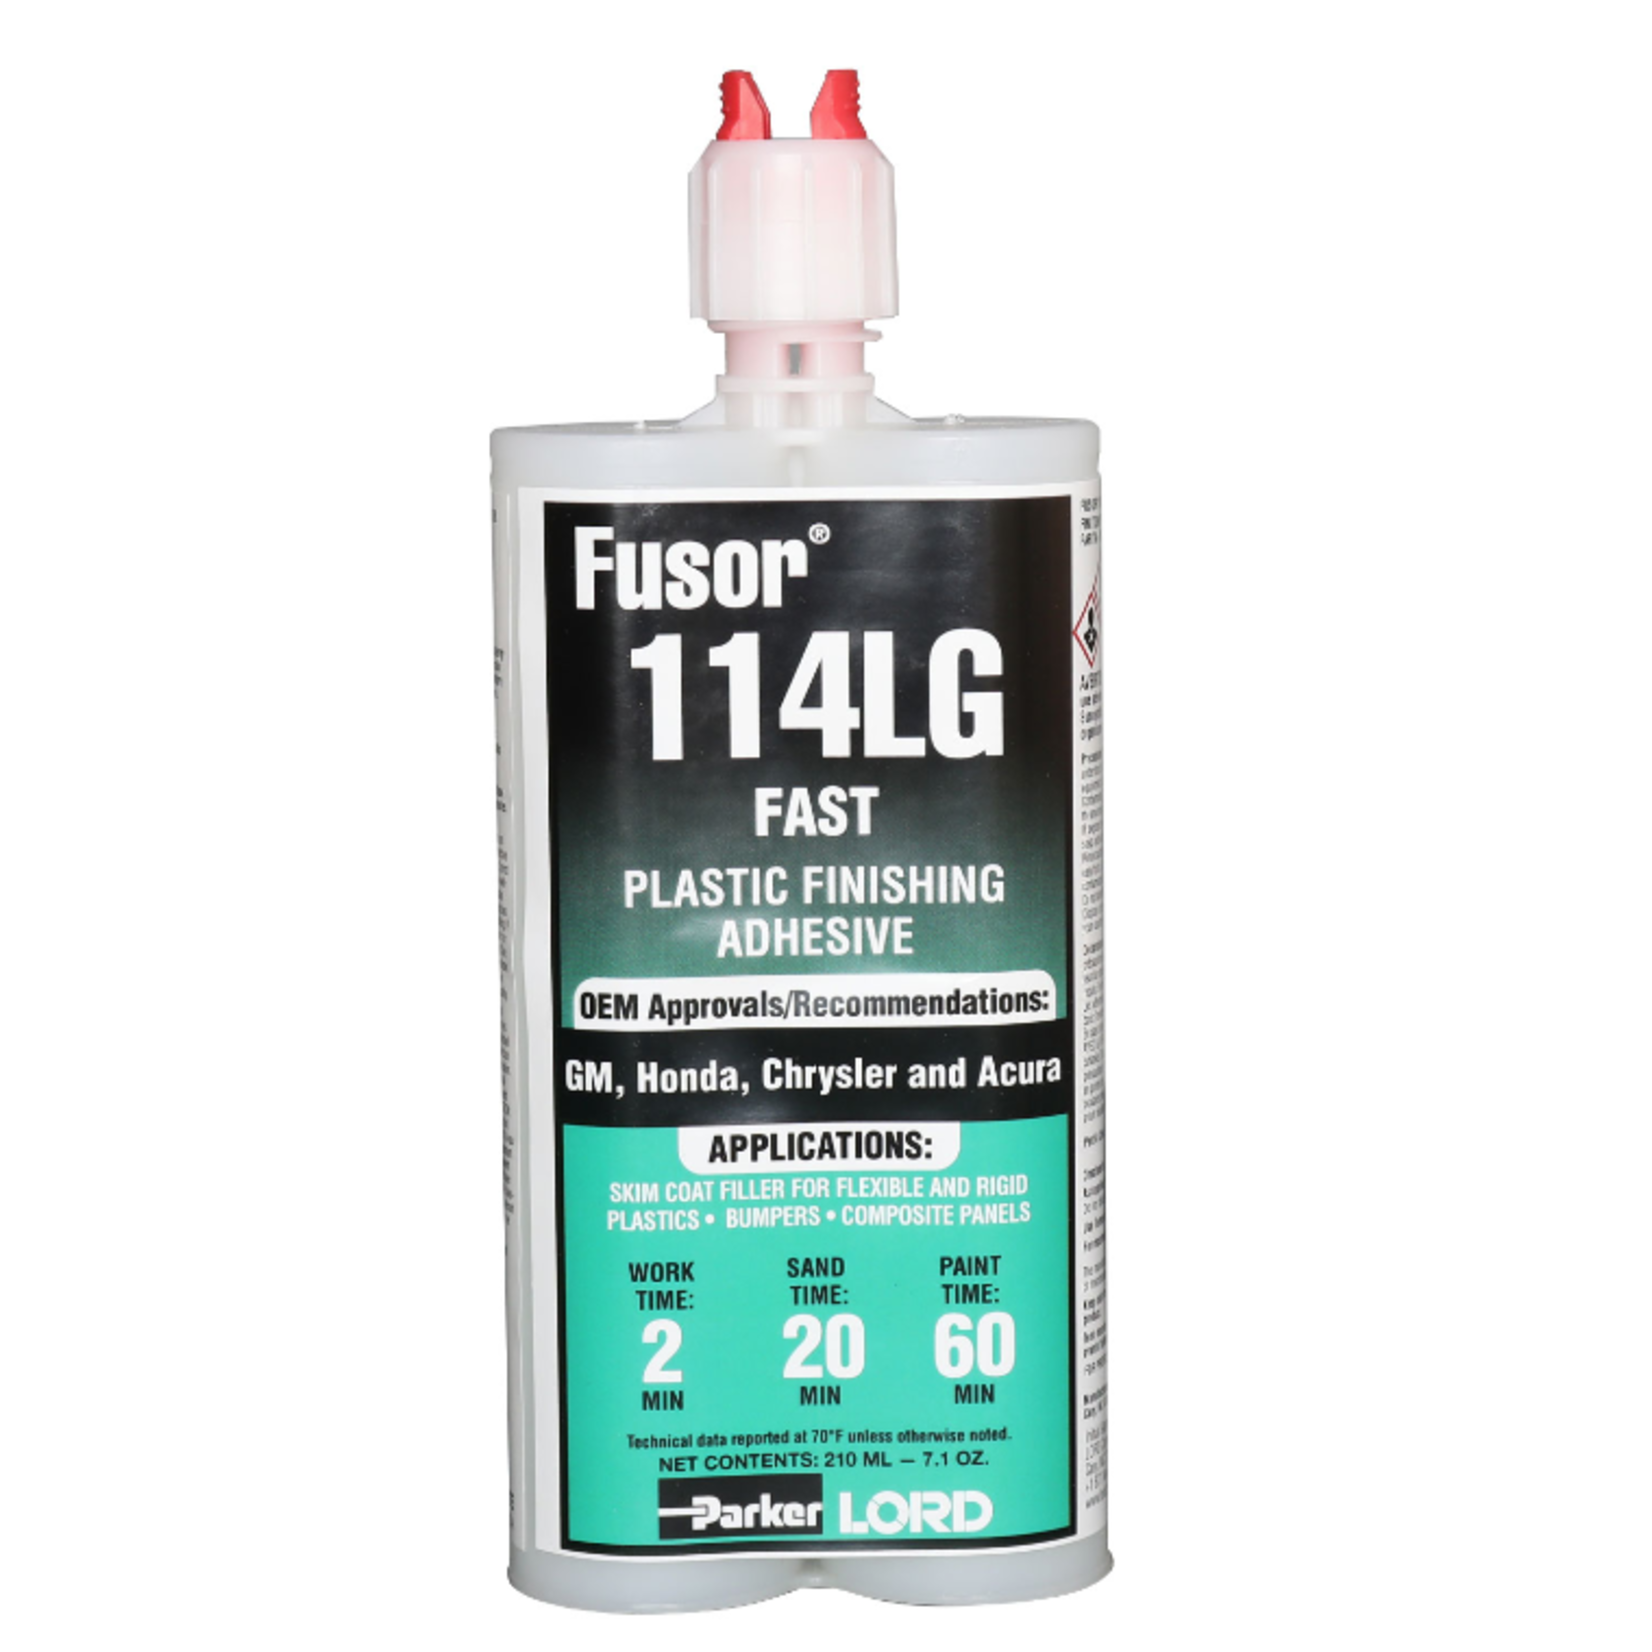 Lord Fusor Fusor 114LG Plastic Finish Adh (Fast) 210ml